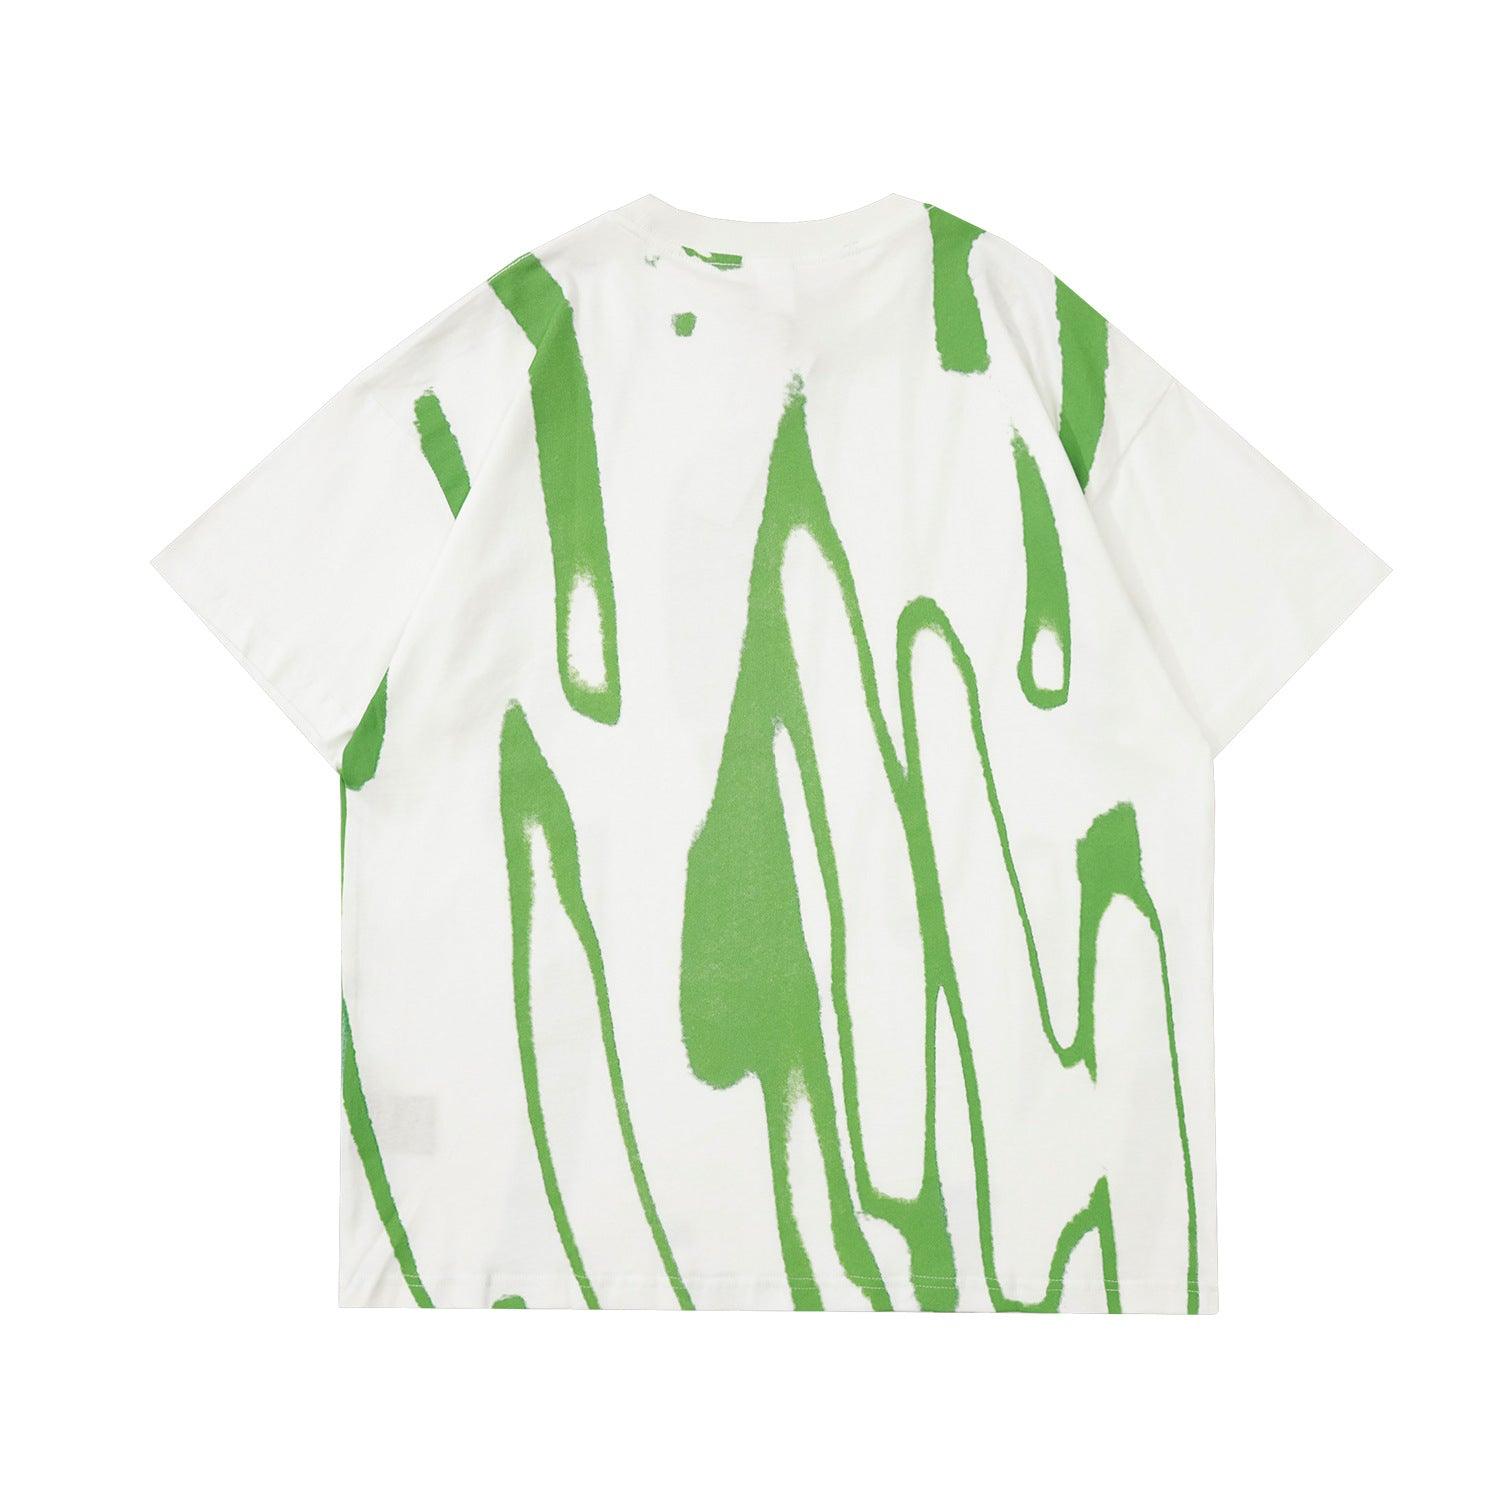 Printed Cotton T-shirt Men's Summer T-Shirts & hoodies